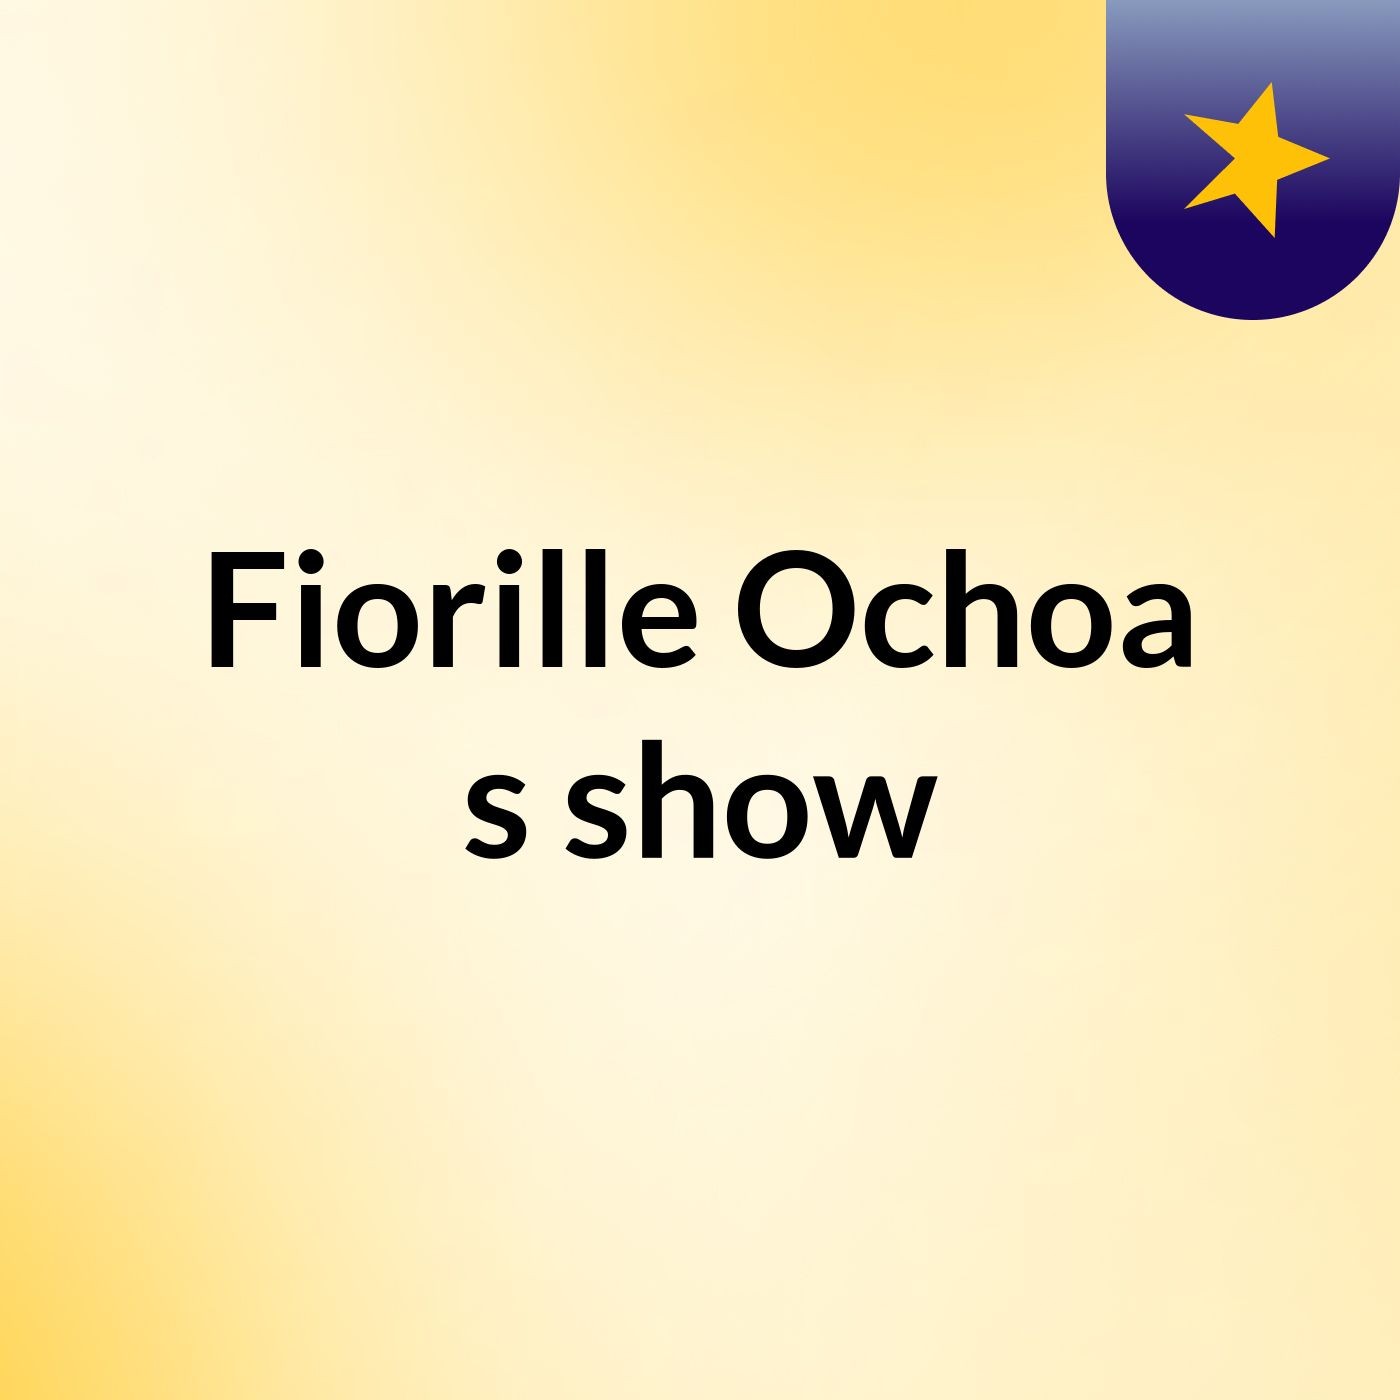 Fiorille Ochoa's show